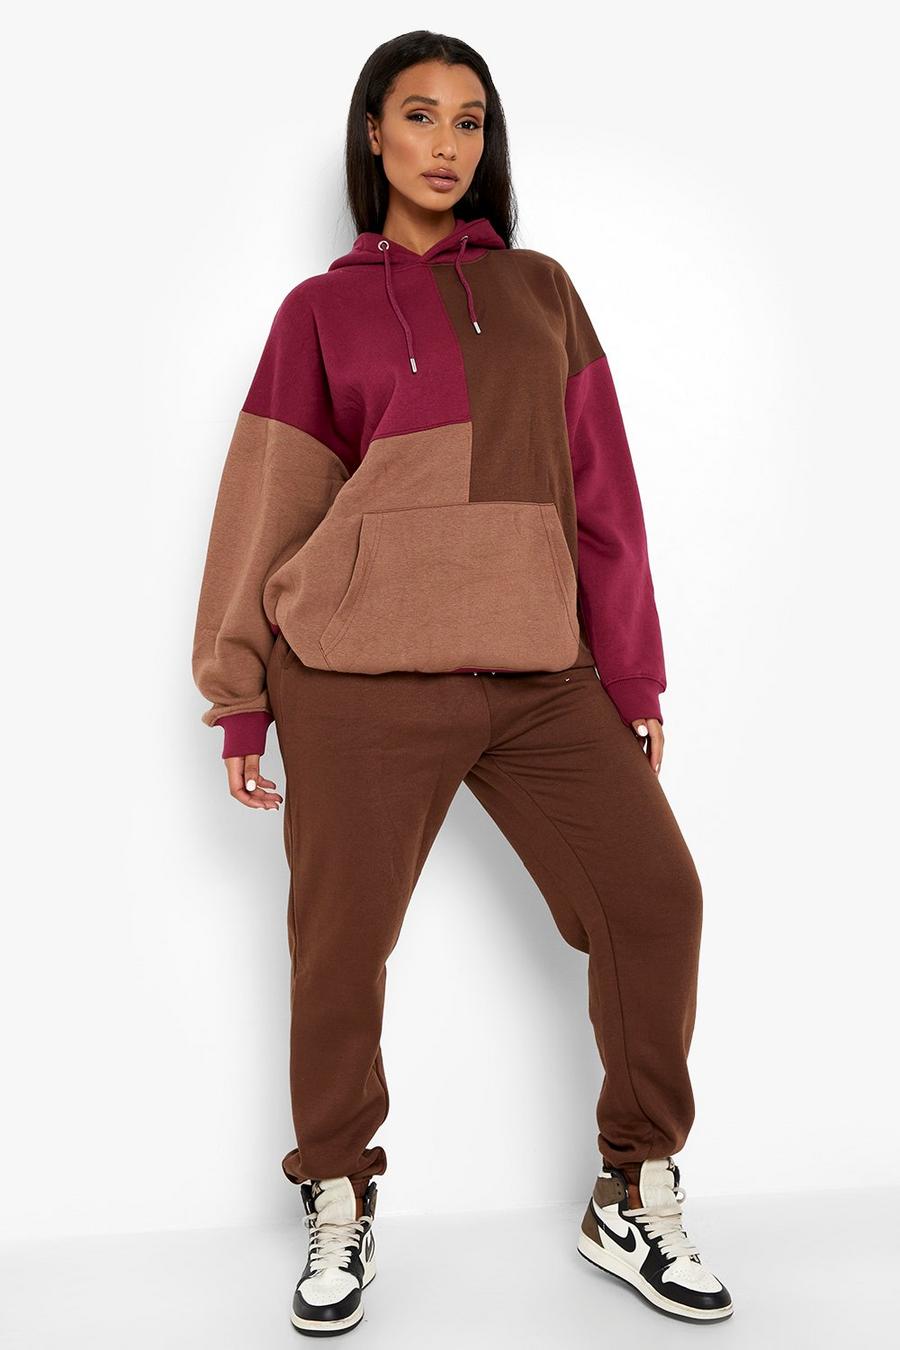 Brauner Colorblock Trainingsanzug mit Kapuze , Chocolate image number 1